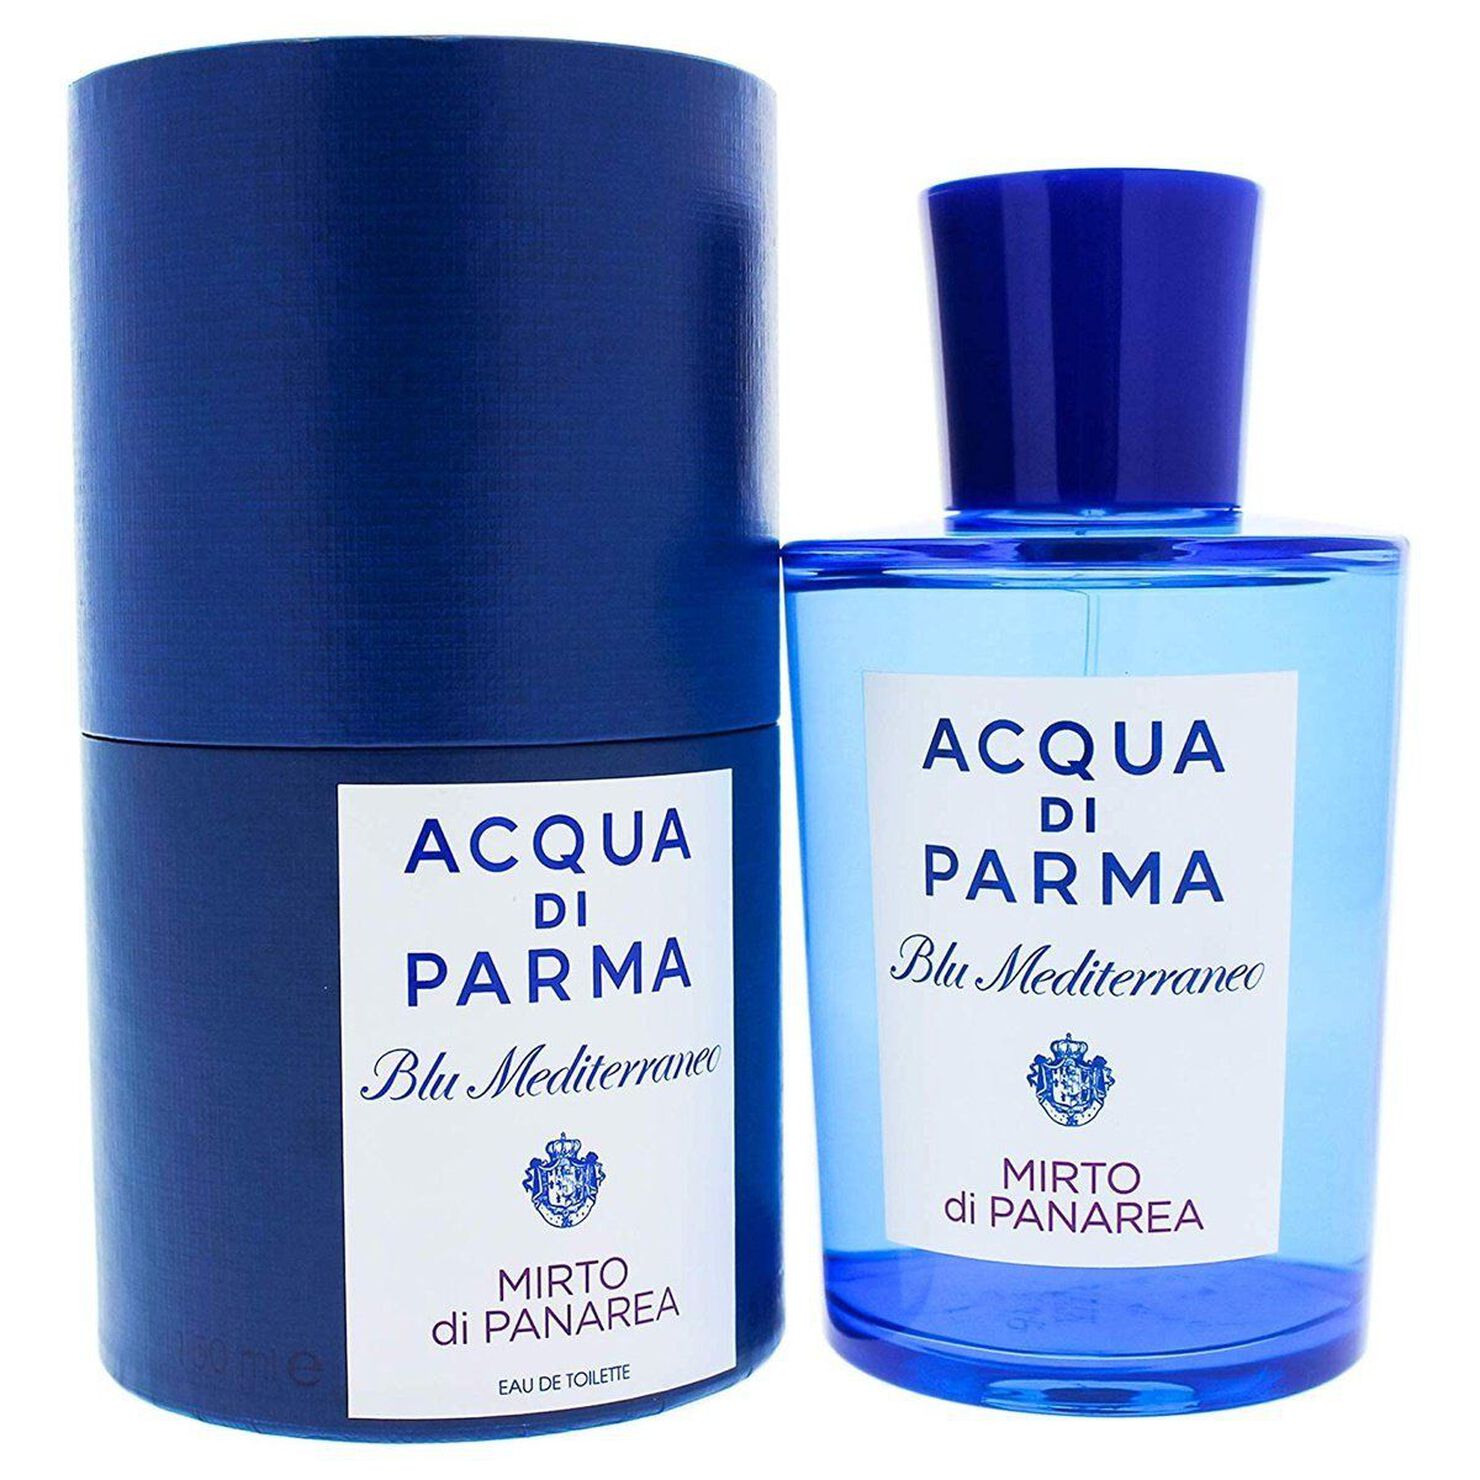 Acqua Di Parma Blu Med. Mirto de Panarea edt 75ml | Paris.cl